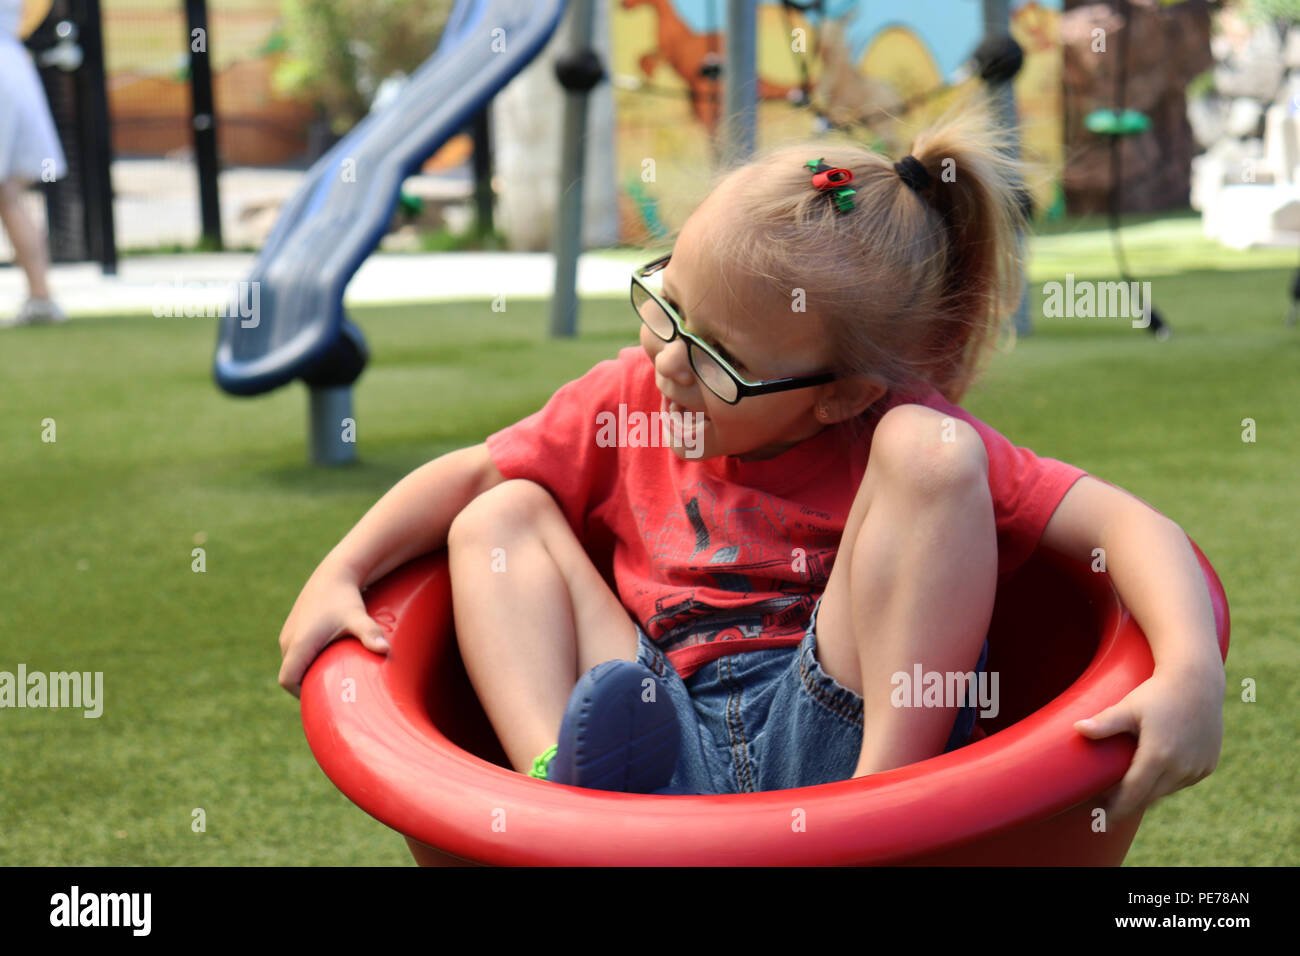 Little girl enjoying herself at the playground Stock Photo